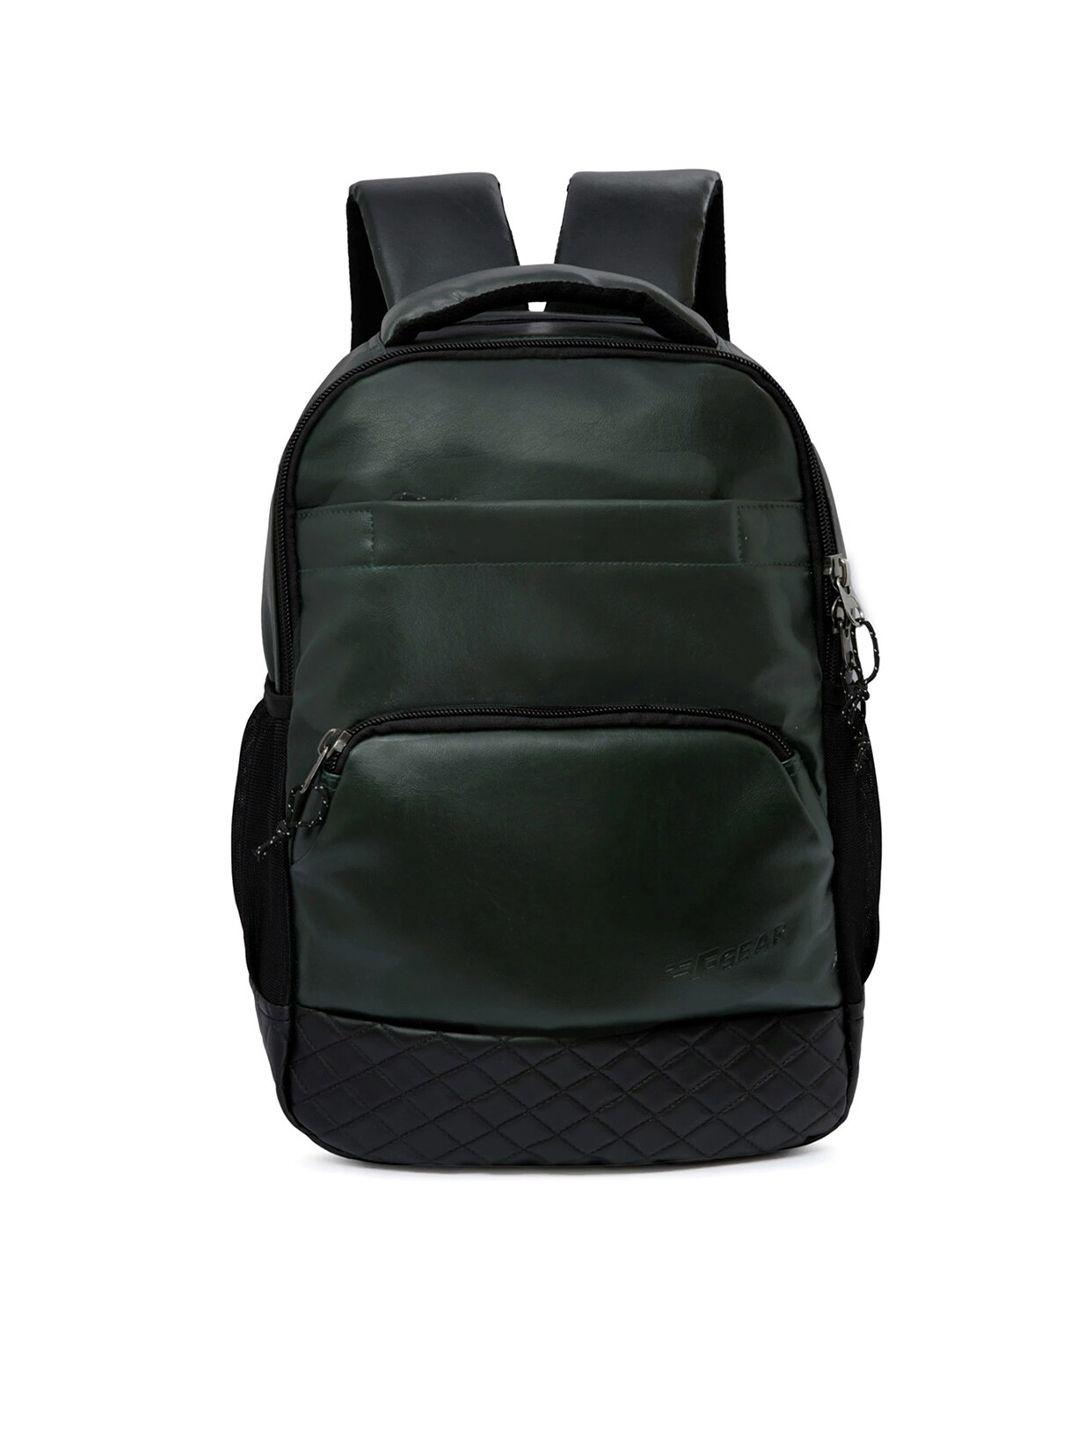 f gear unisex olive green & black solid backpack